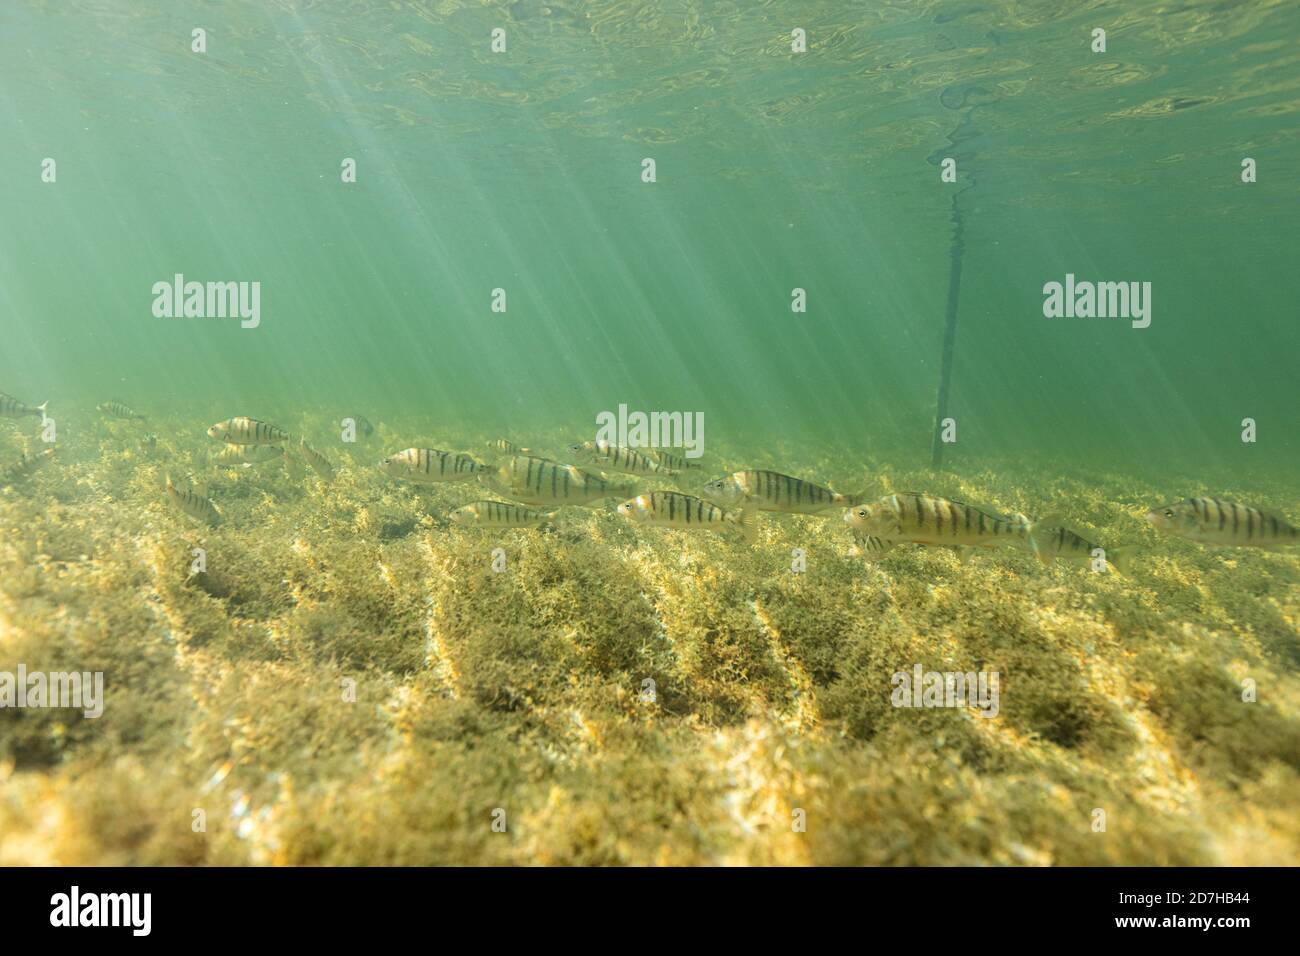 Perch, European perch, Redfin perch (Perca fluviatilis), shoal of perches over stoneworts, underwater photo, Germany, Bavaria, Lake Chiemsee Stock Photo